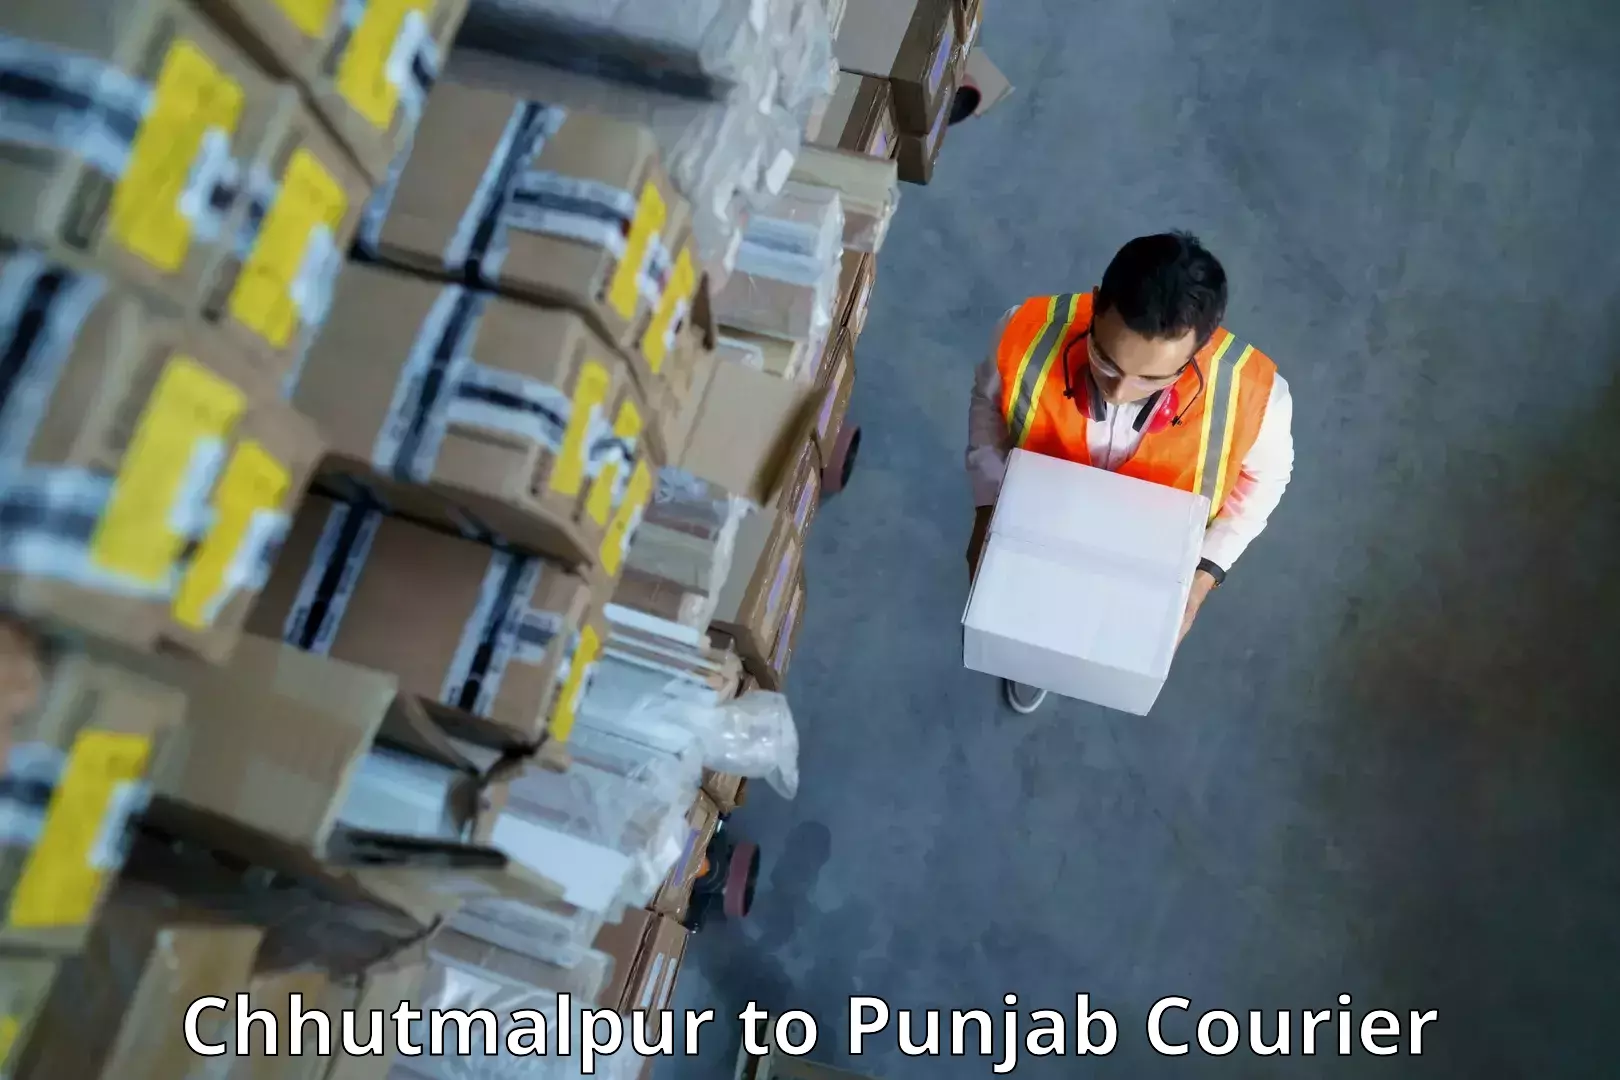 Courier service efficiency in Chhutmalpur to Goindwal Sahib